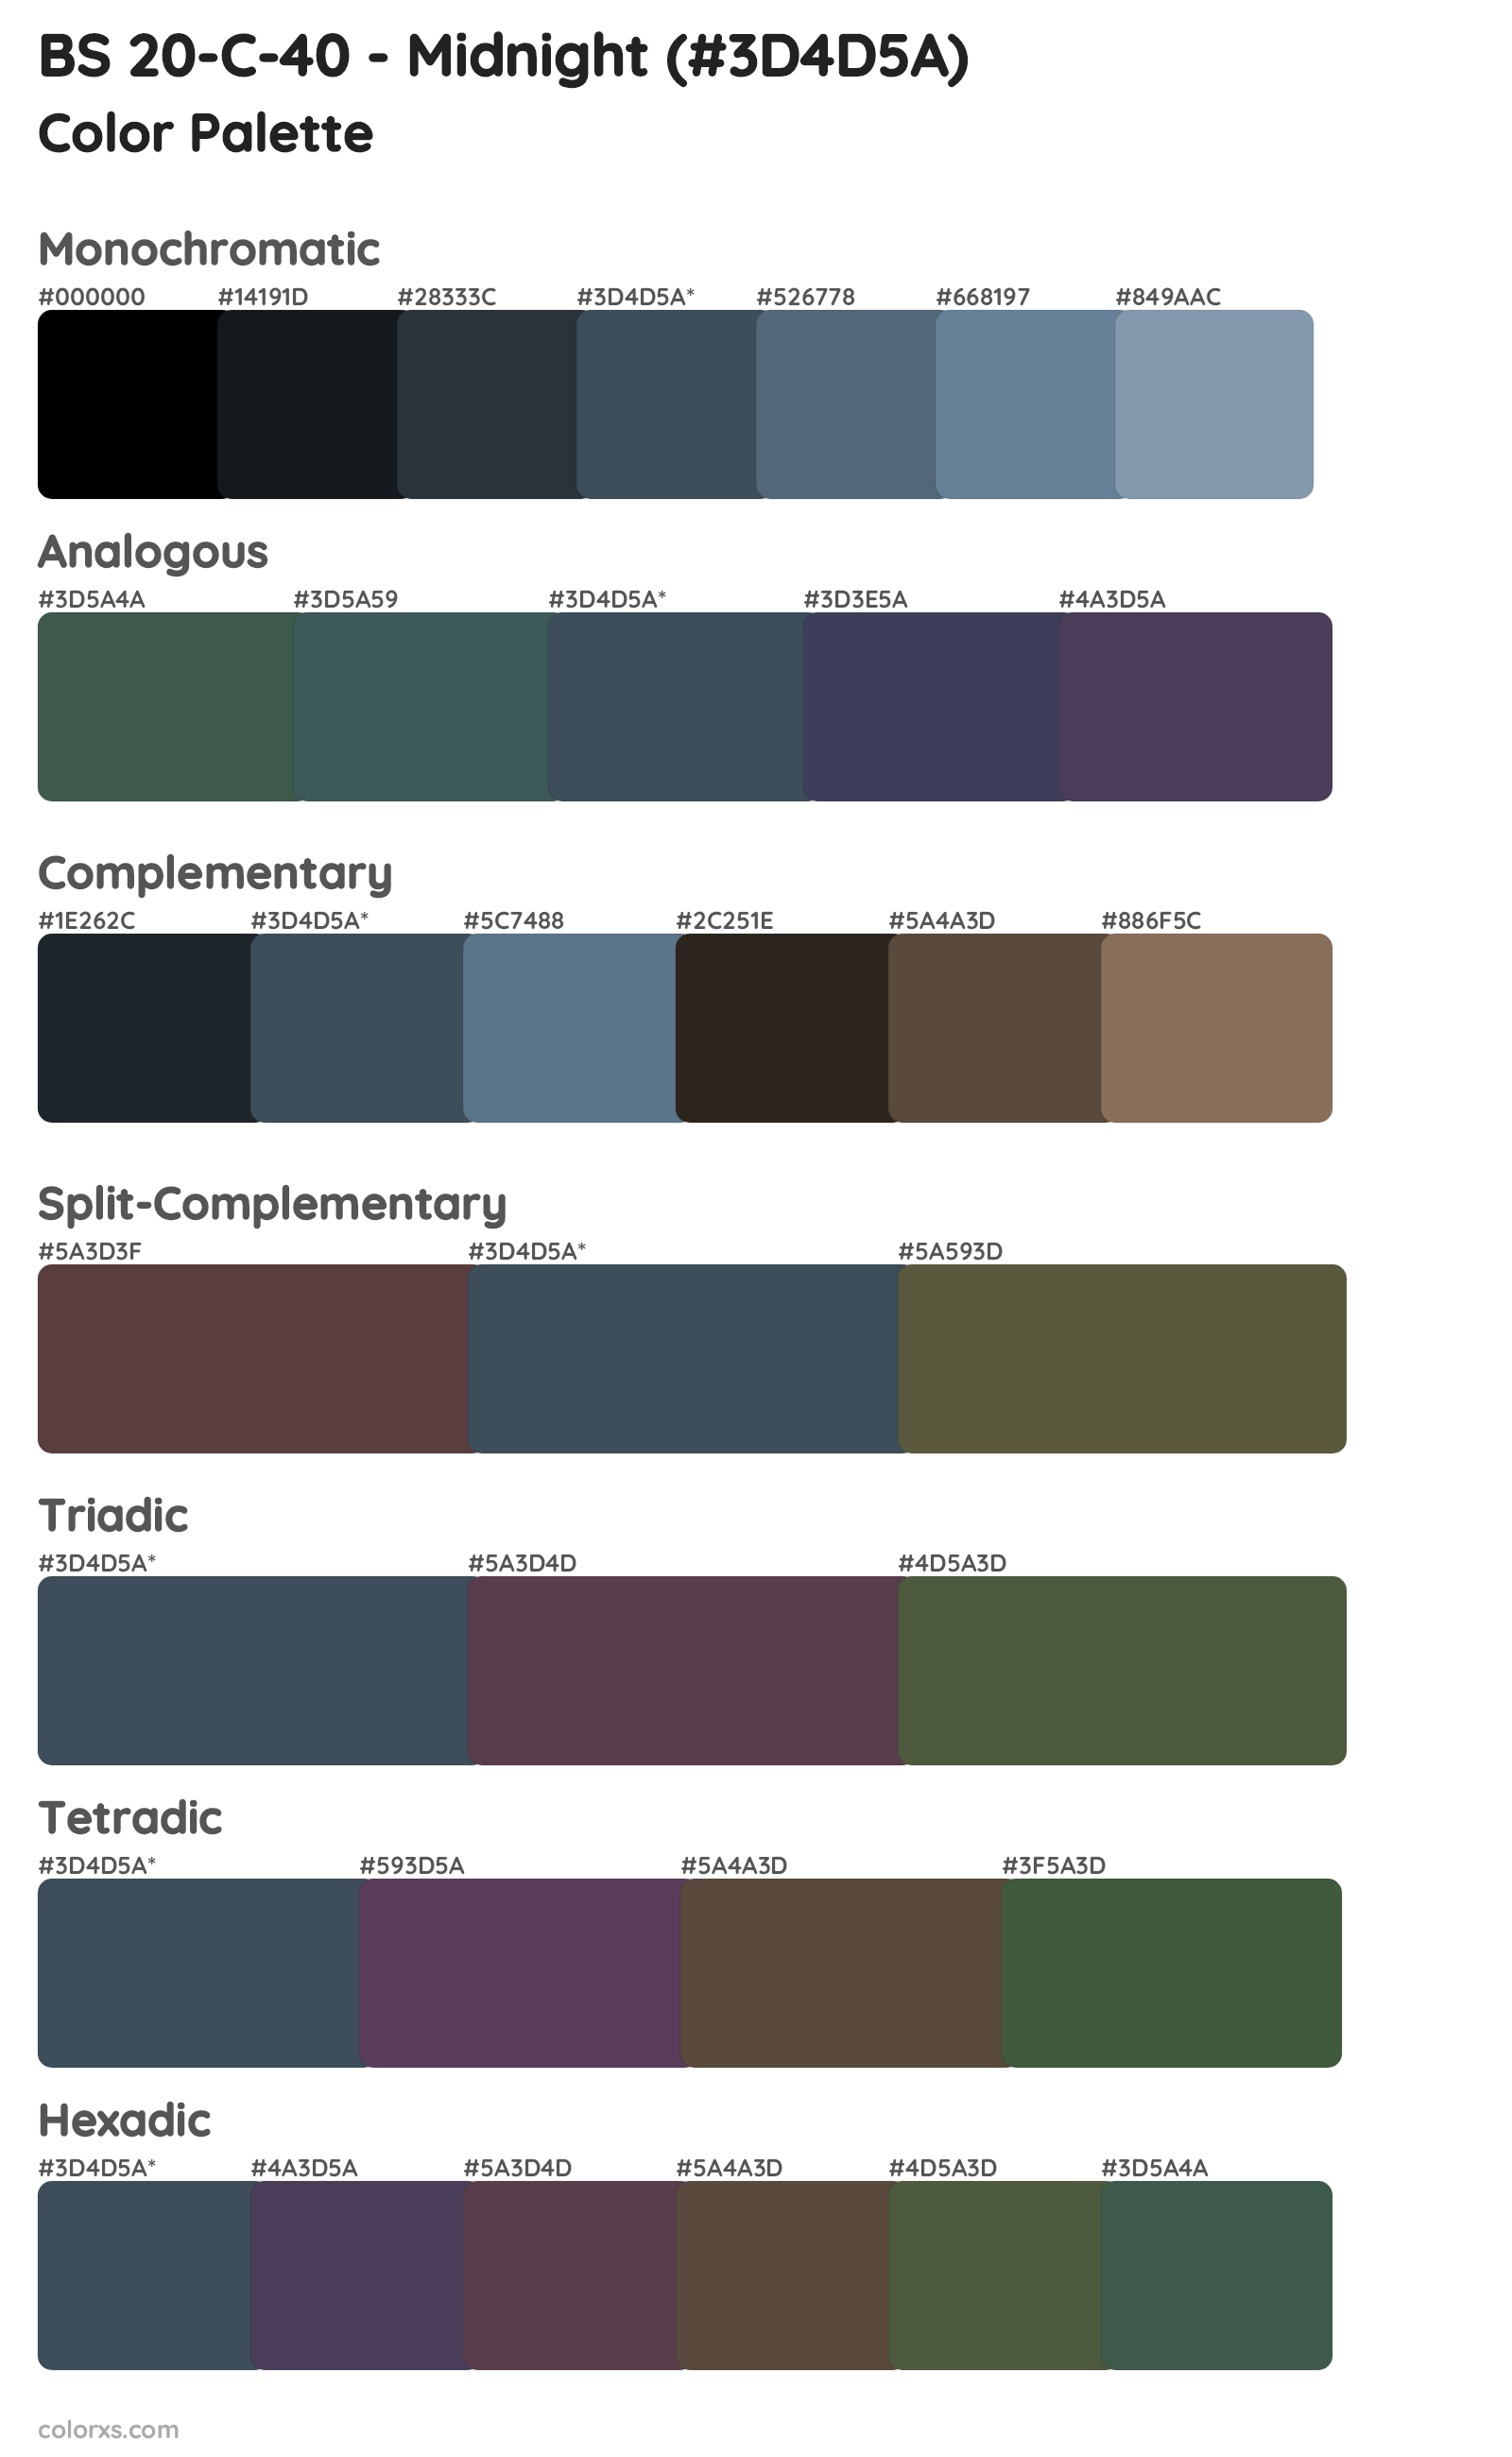 BS 20-C-40 - Midnight Color Scheme Palettes